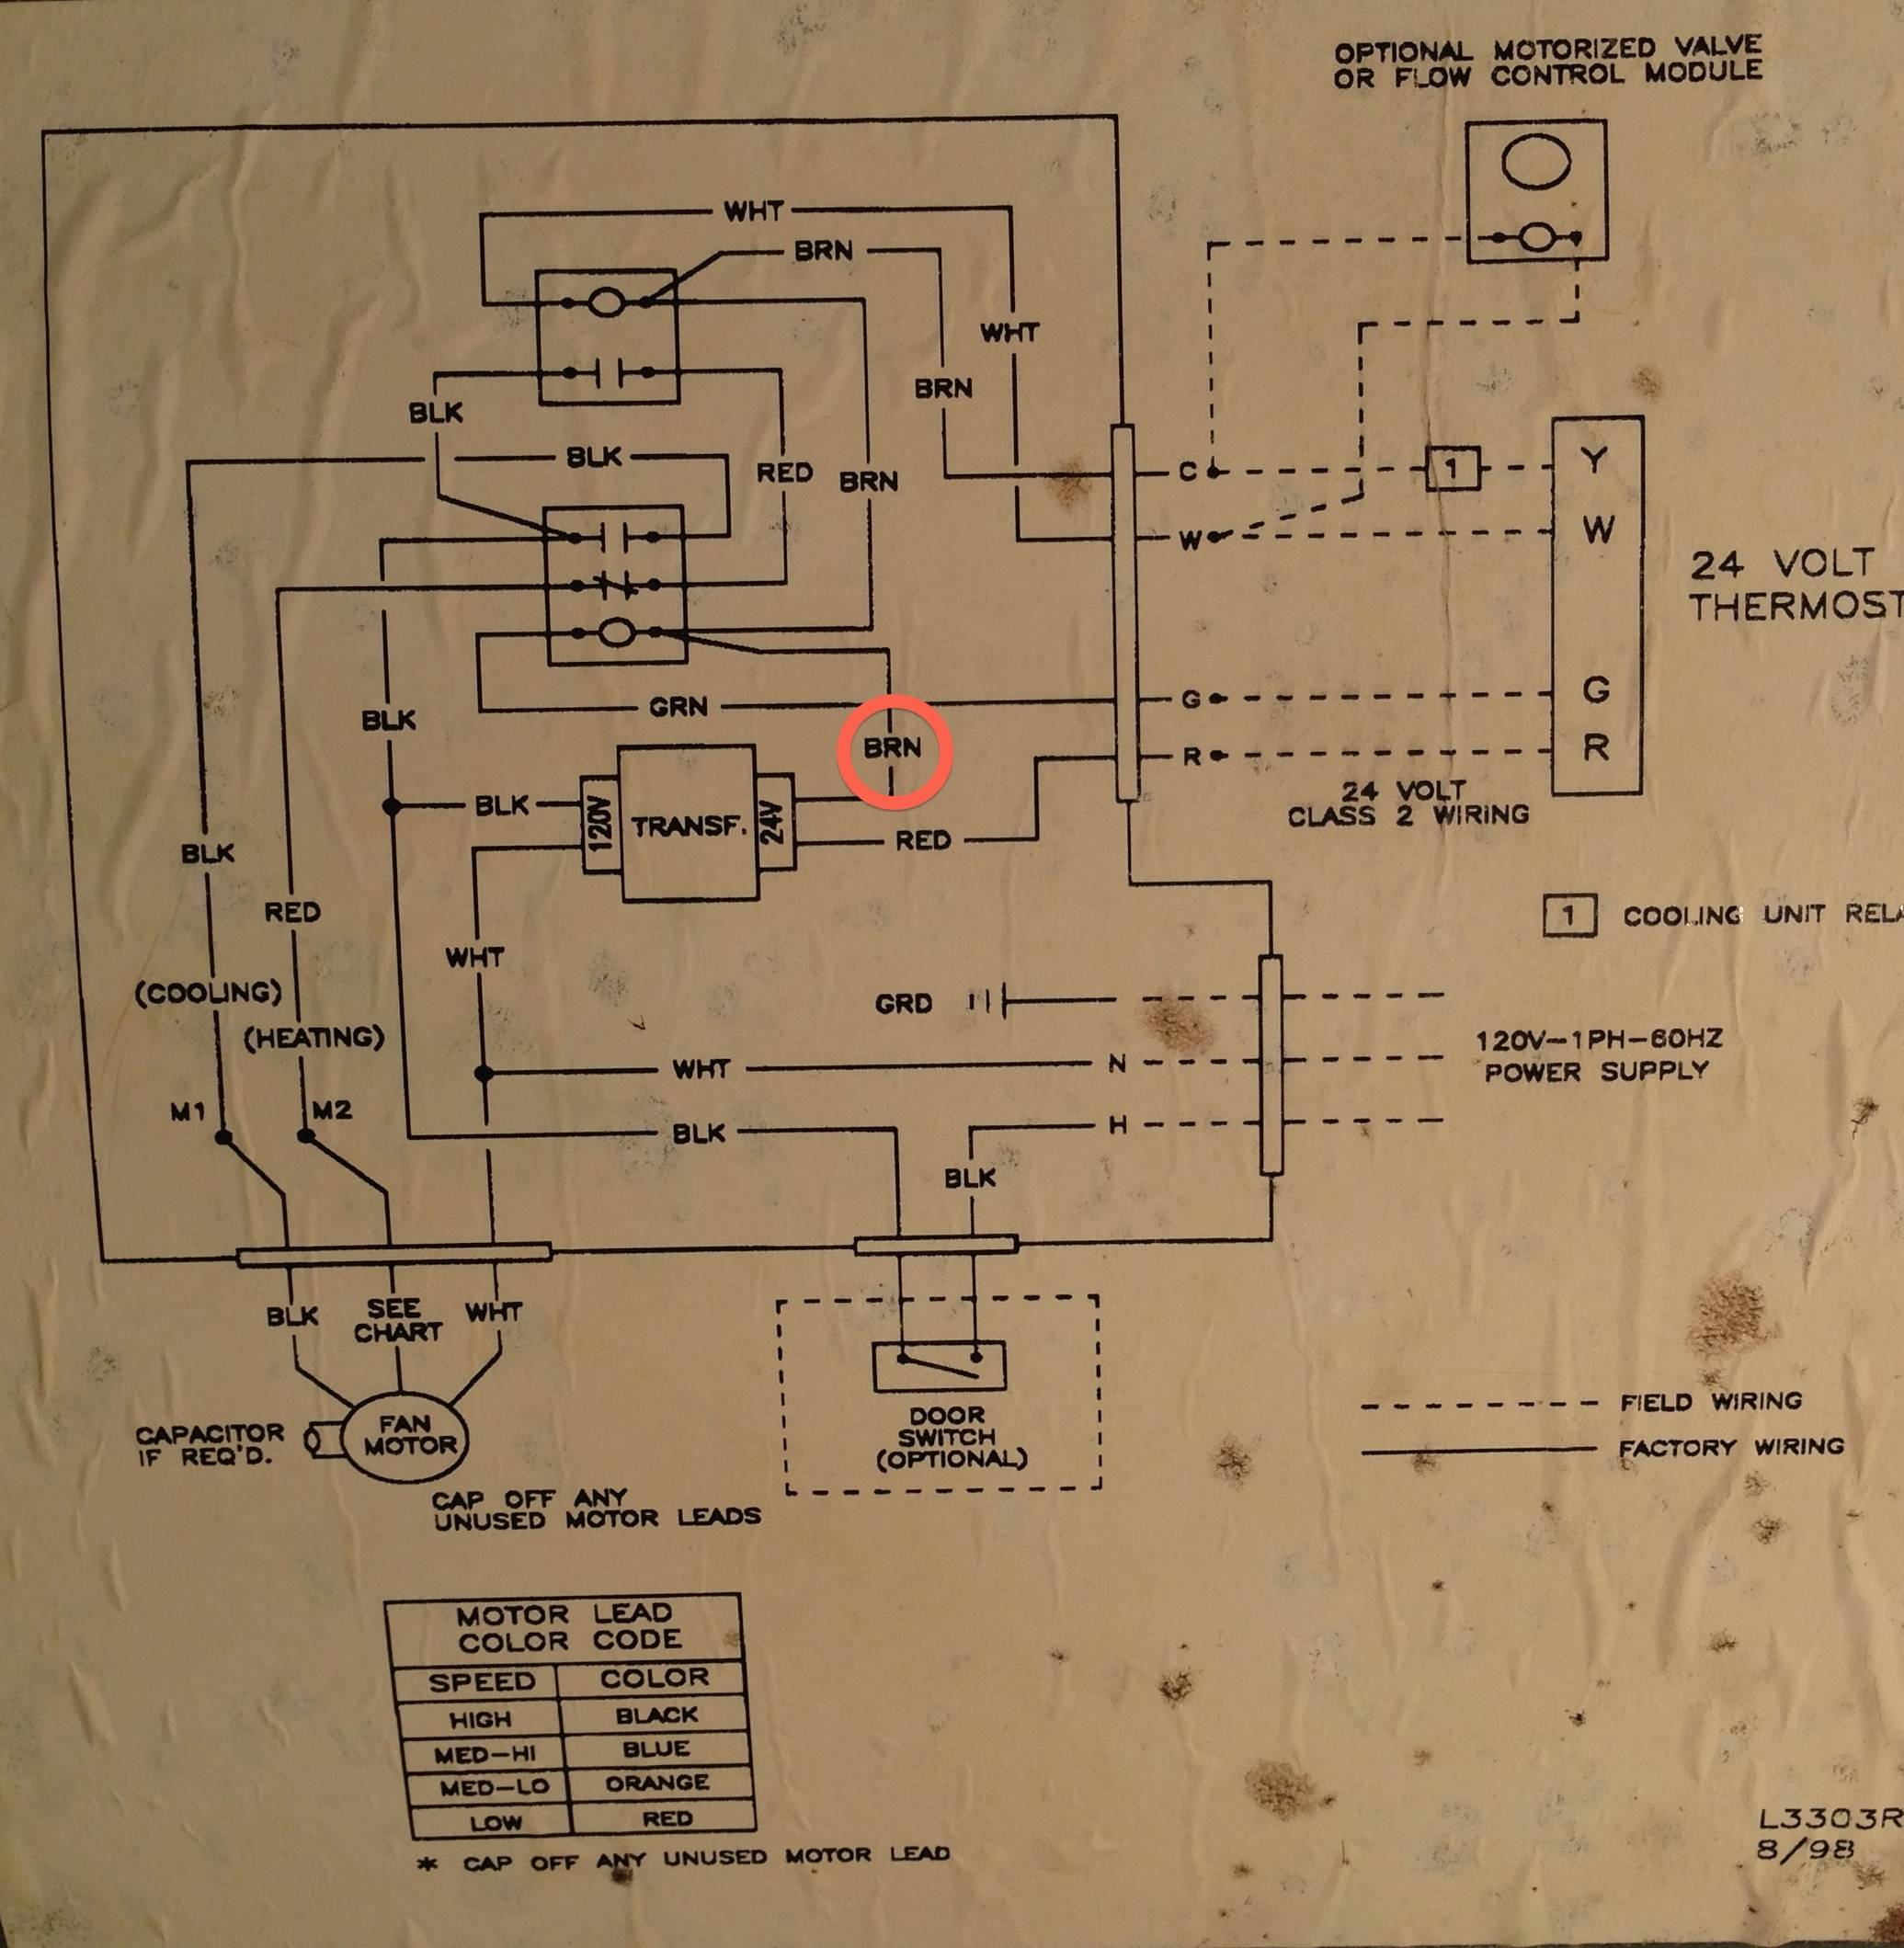 First Company Air Handler Wiring Diagram | Wiring Diagram - First Company Air Handler Wiring Diagram